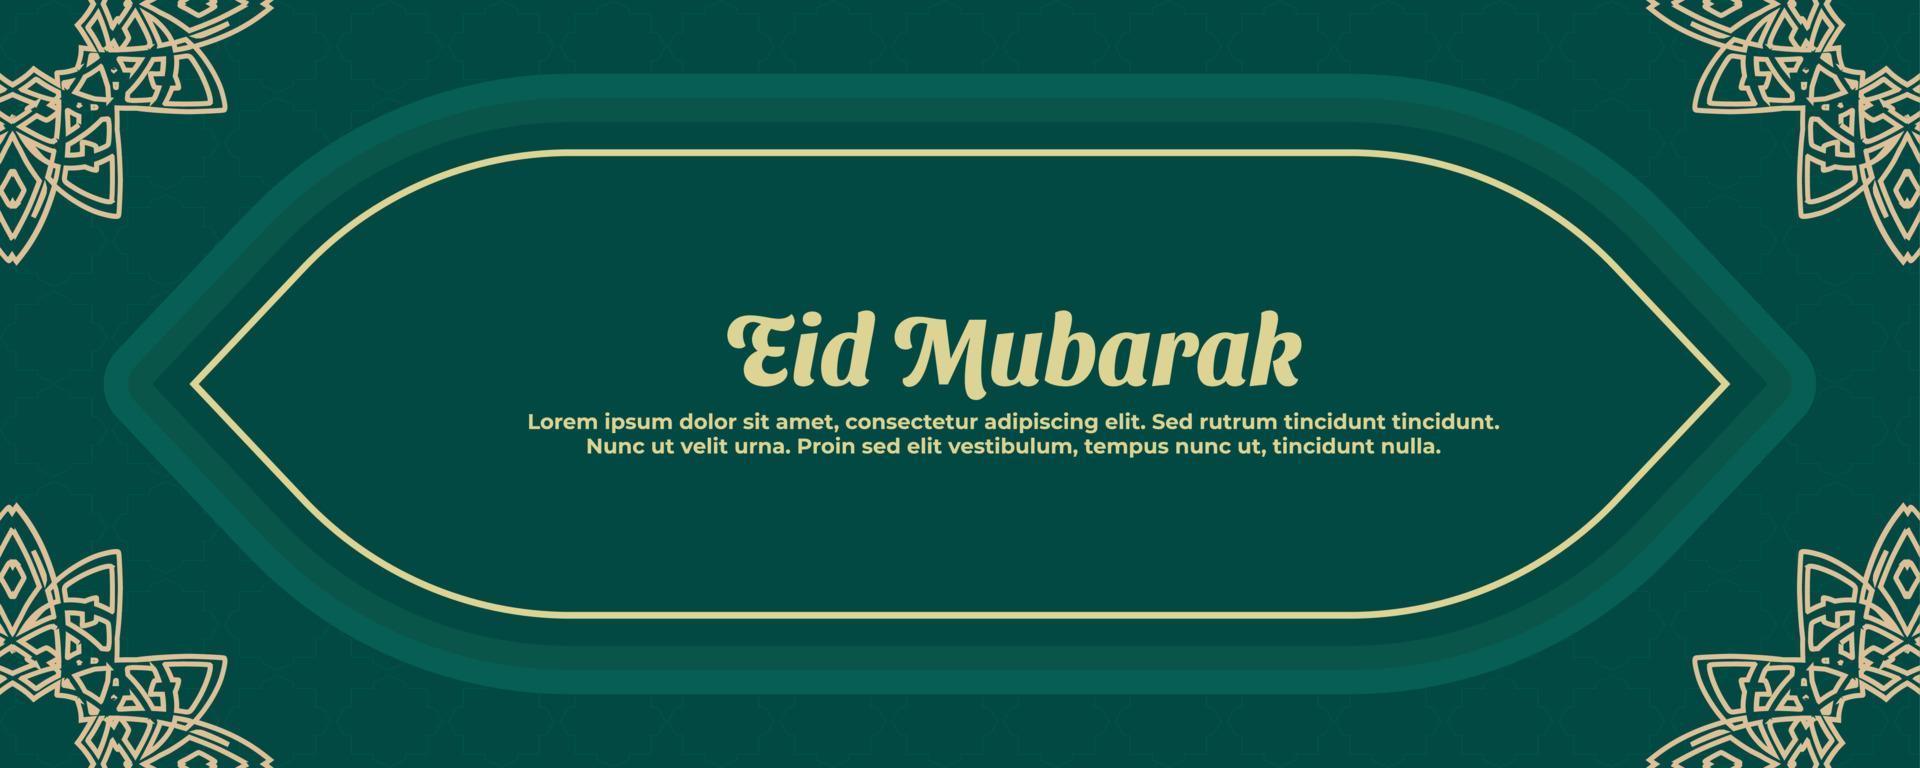 festival musulmán eid mubarak fondo vector